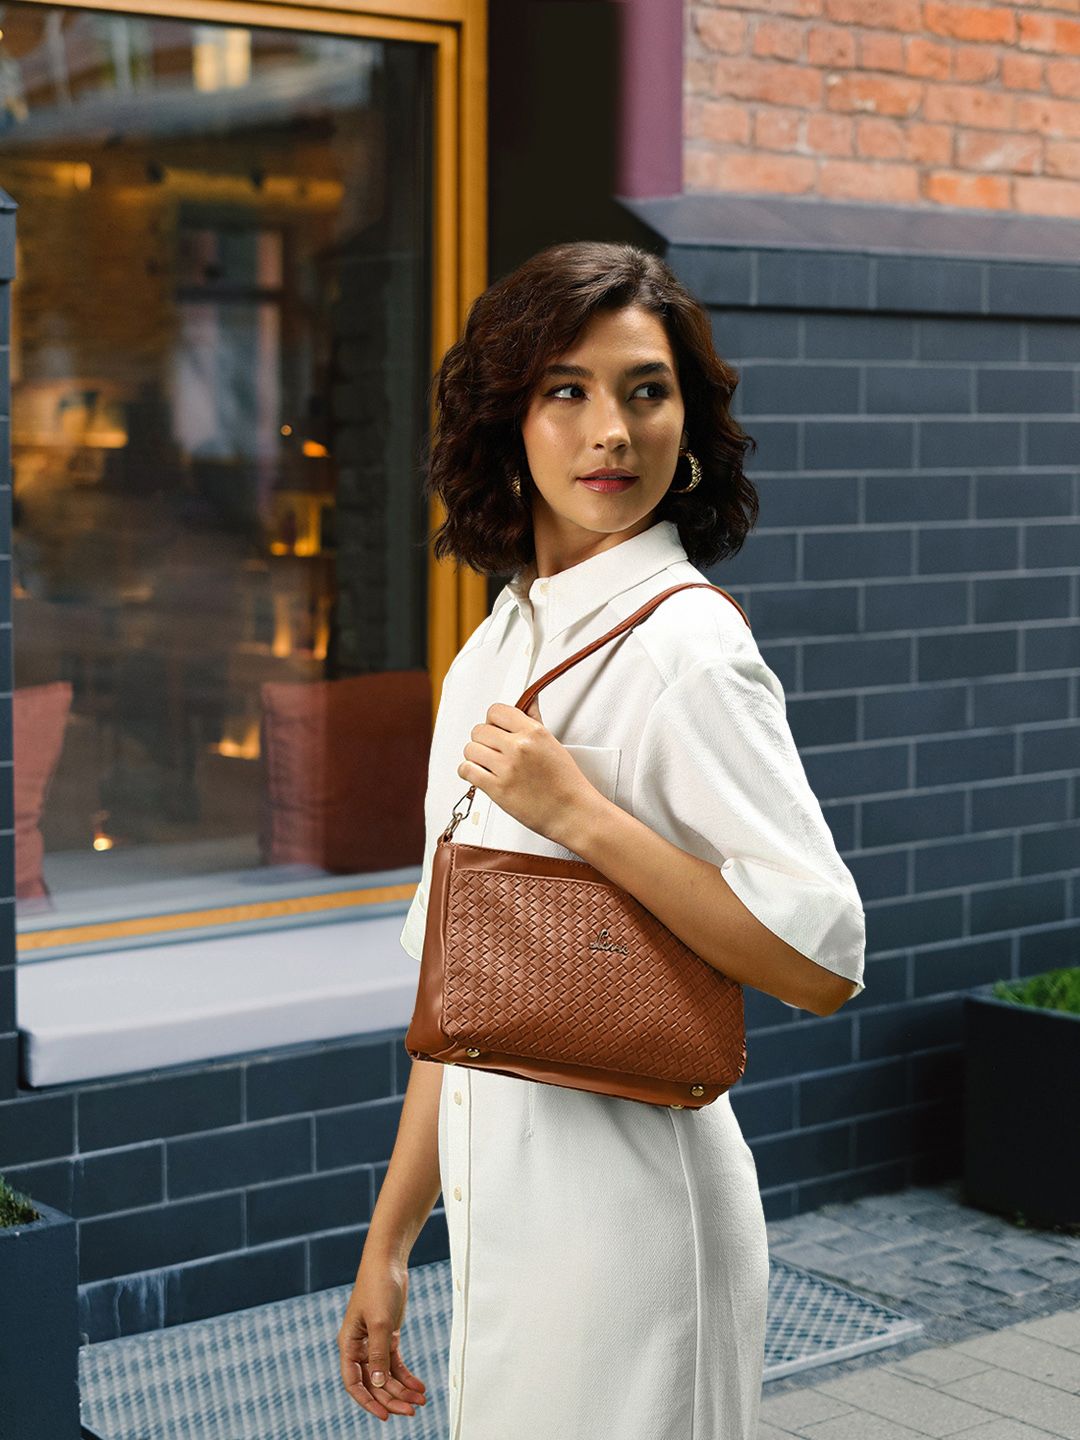 Baggit Women's Sling Bag (BROWN) : : Fashion